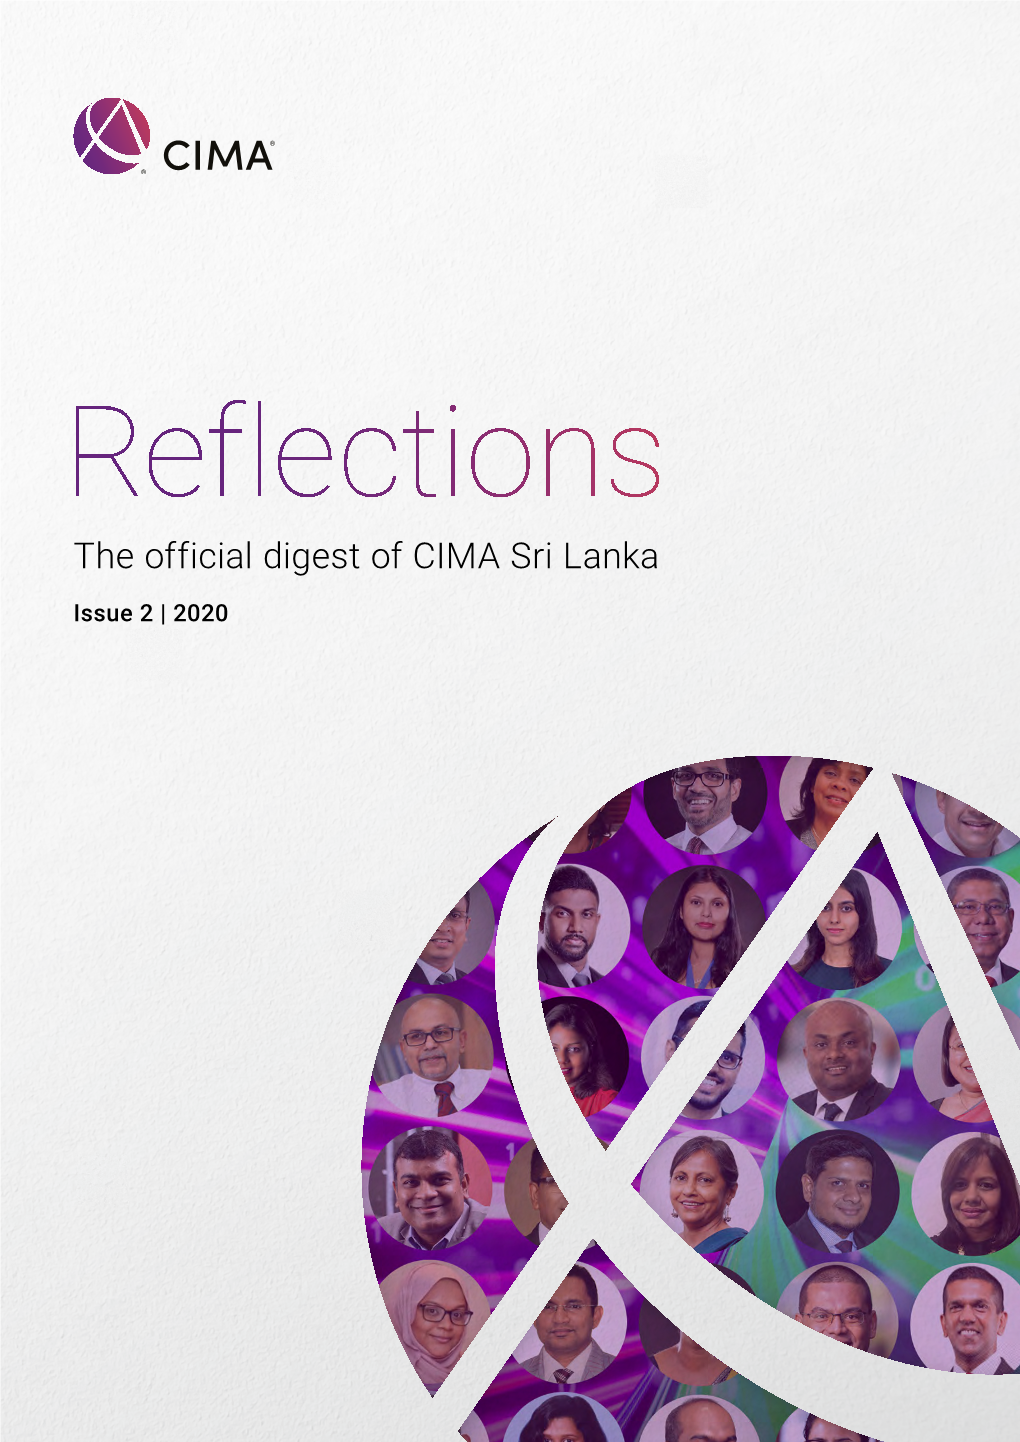 The Official Digest of CIMA Sri Lanka